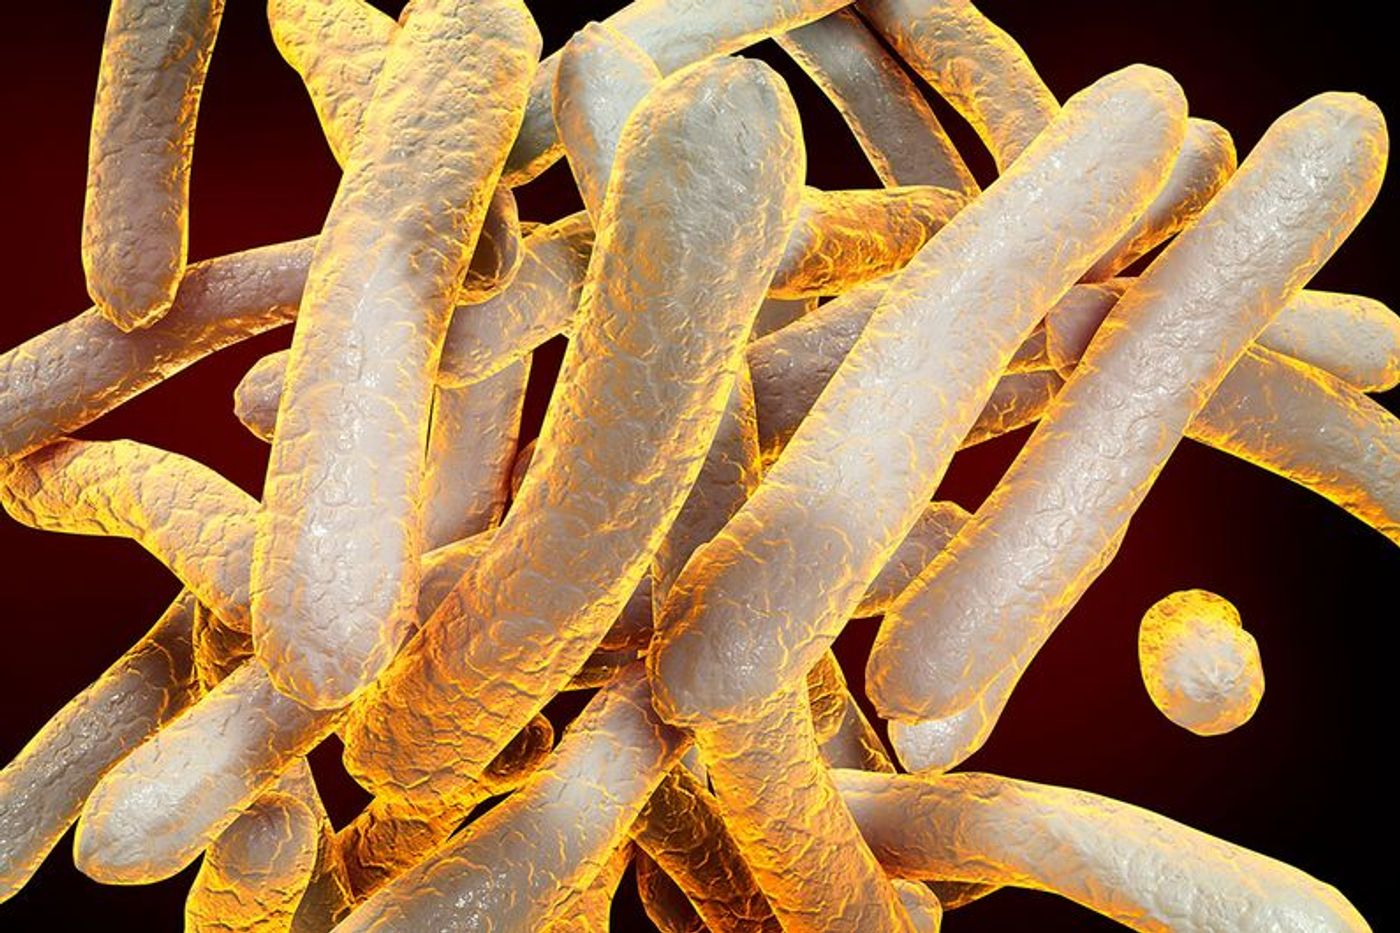 "Mycobacterium tuberculosis" is an invasive bacterium responsible for tuberculosis. Credit: Thinkstock/University of Montreal